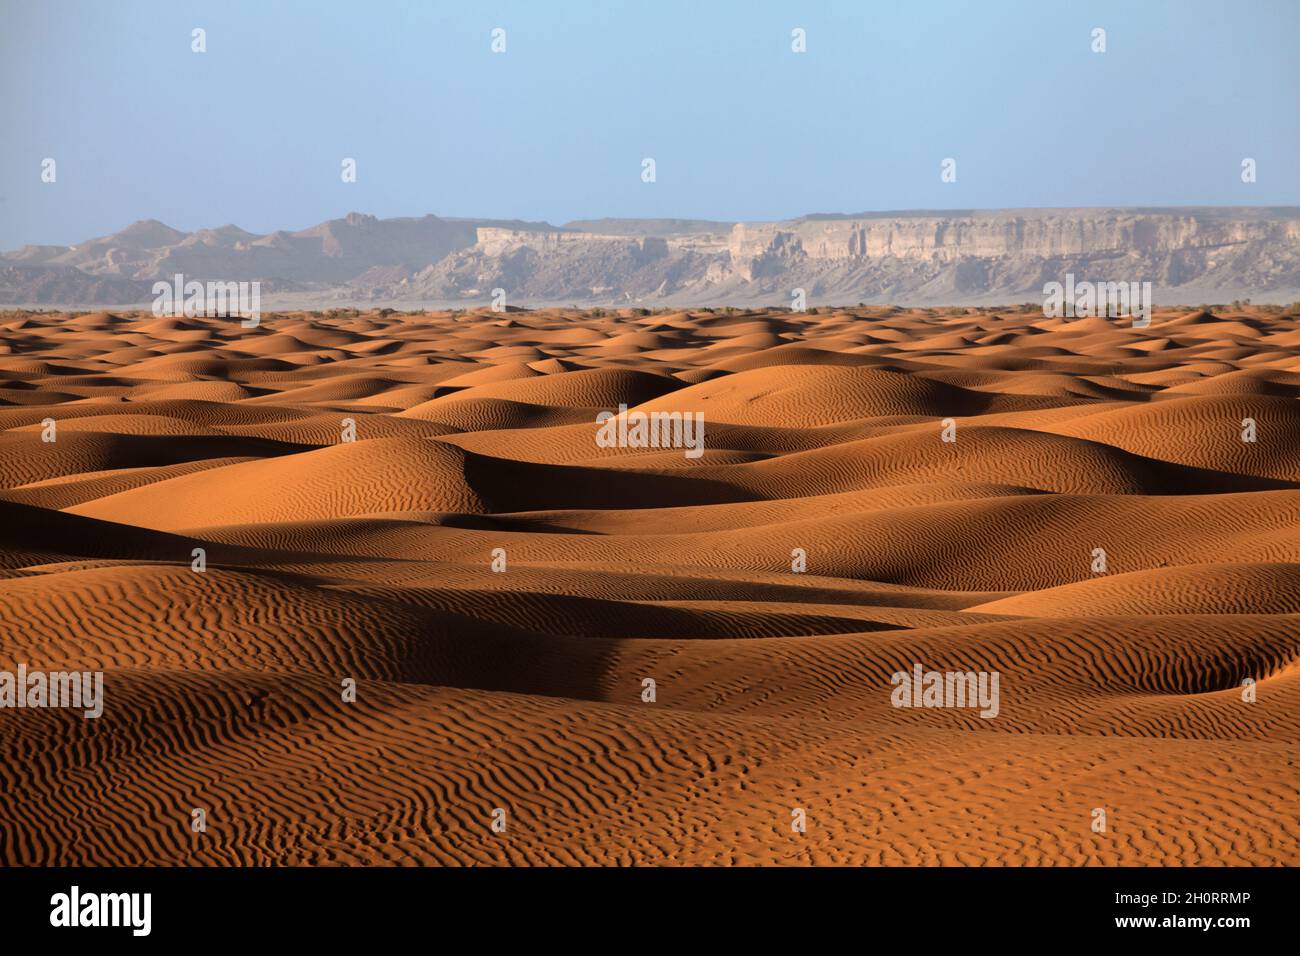 Sand dunes and mountain landscape in the desert, Saudi Arabia Stock Photo